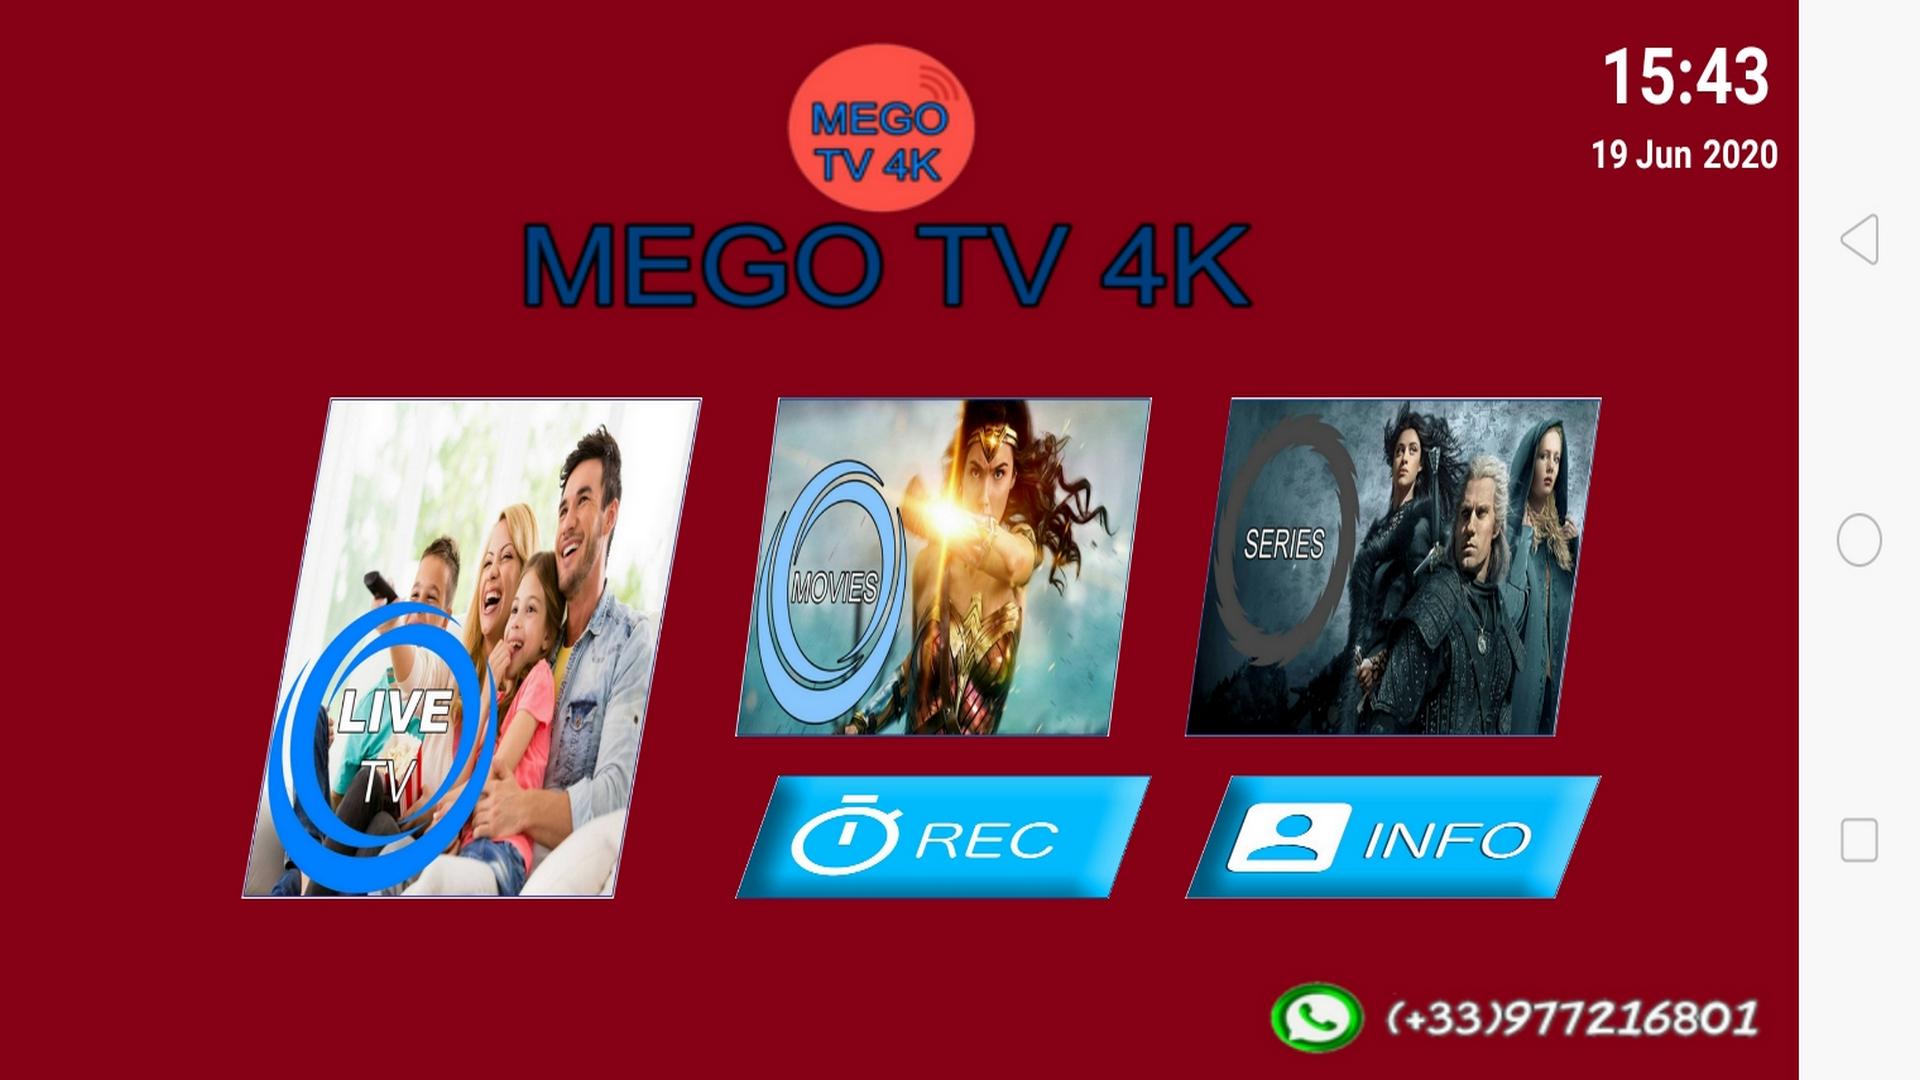 MEGO TV 4K for Android - APK Download